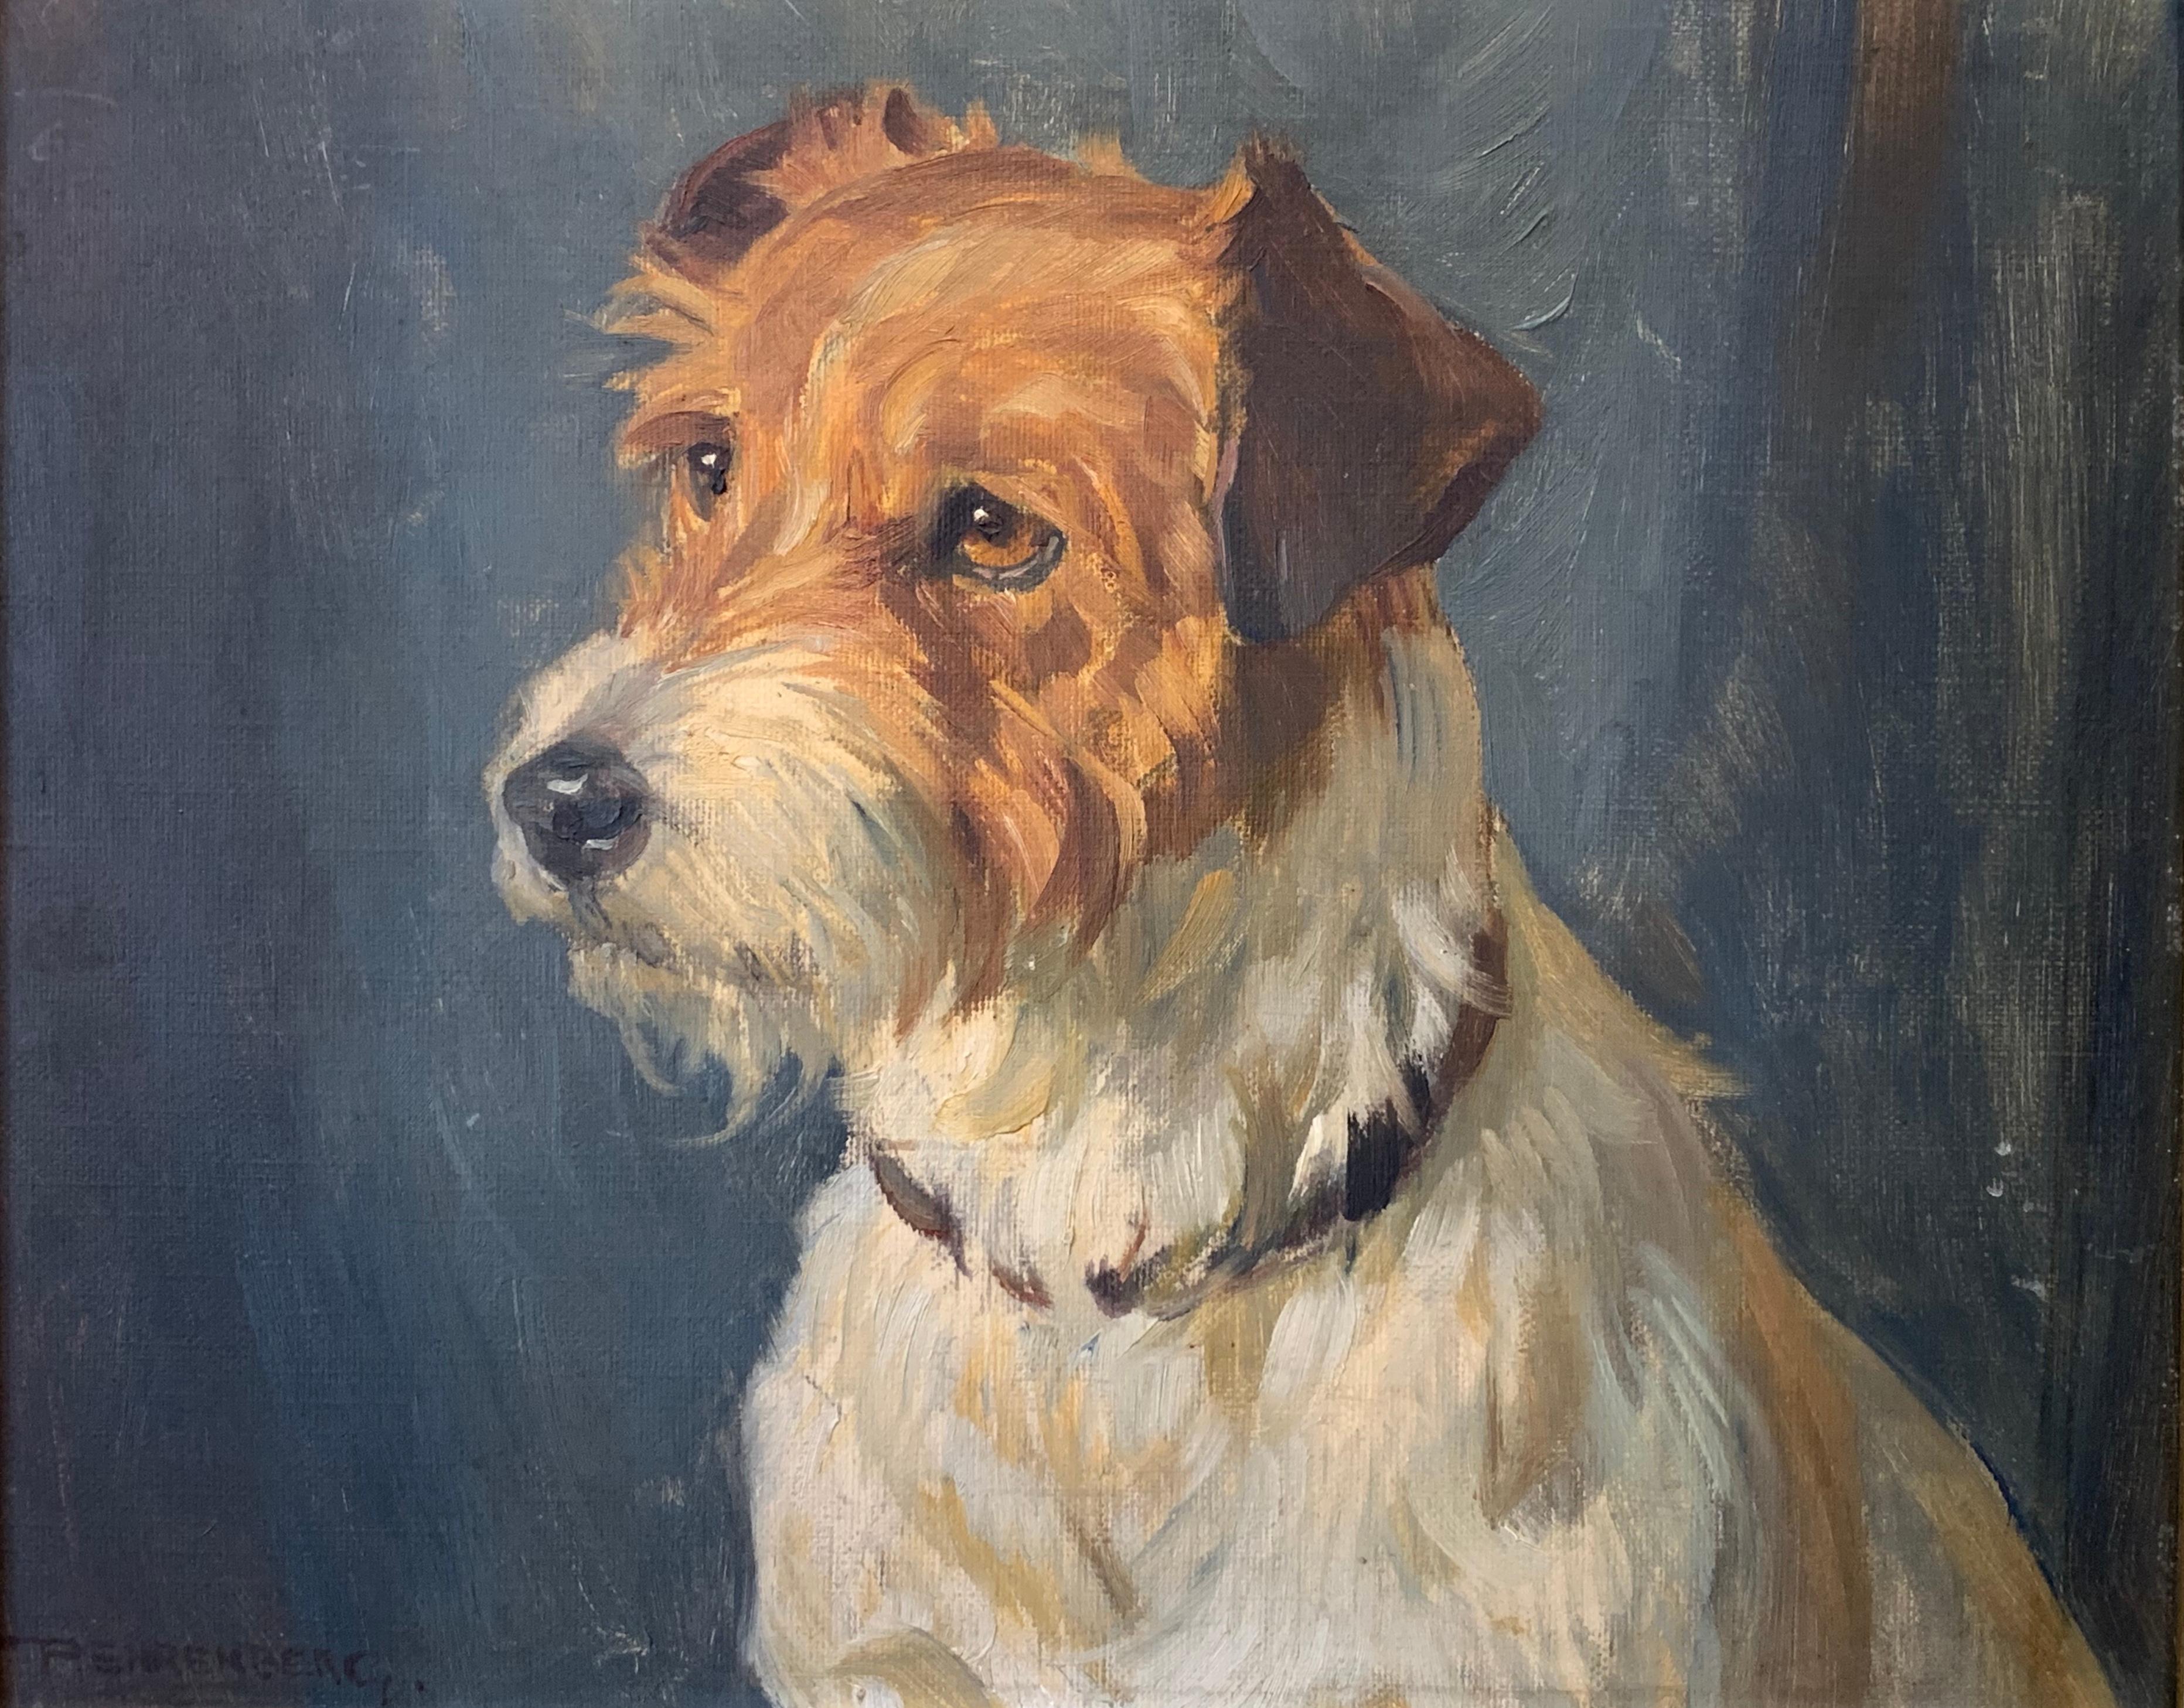 Penrenberg Animal Painting - Jack Russell Terrier Dog Original Signed Oil Painting 1915